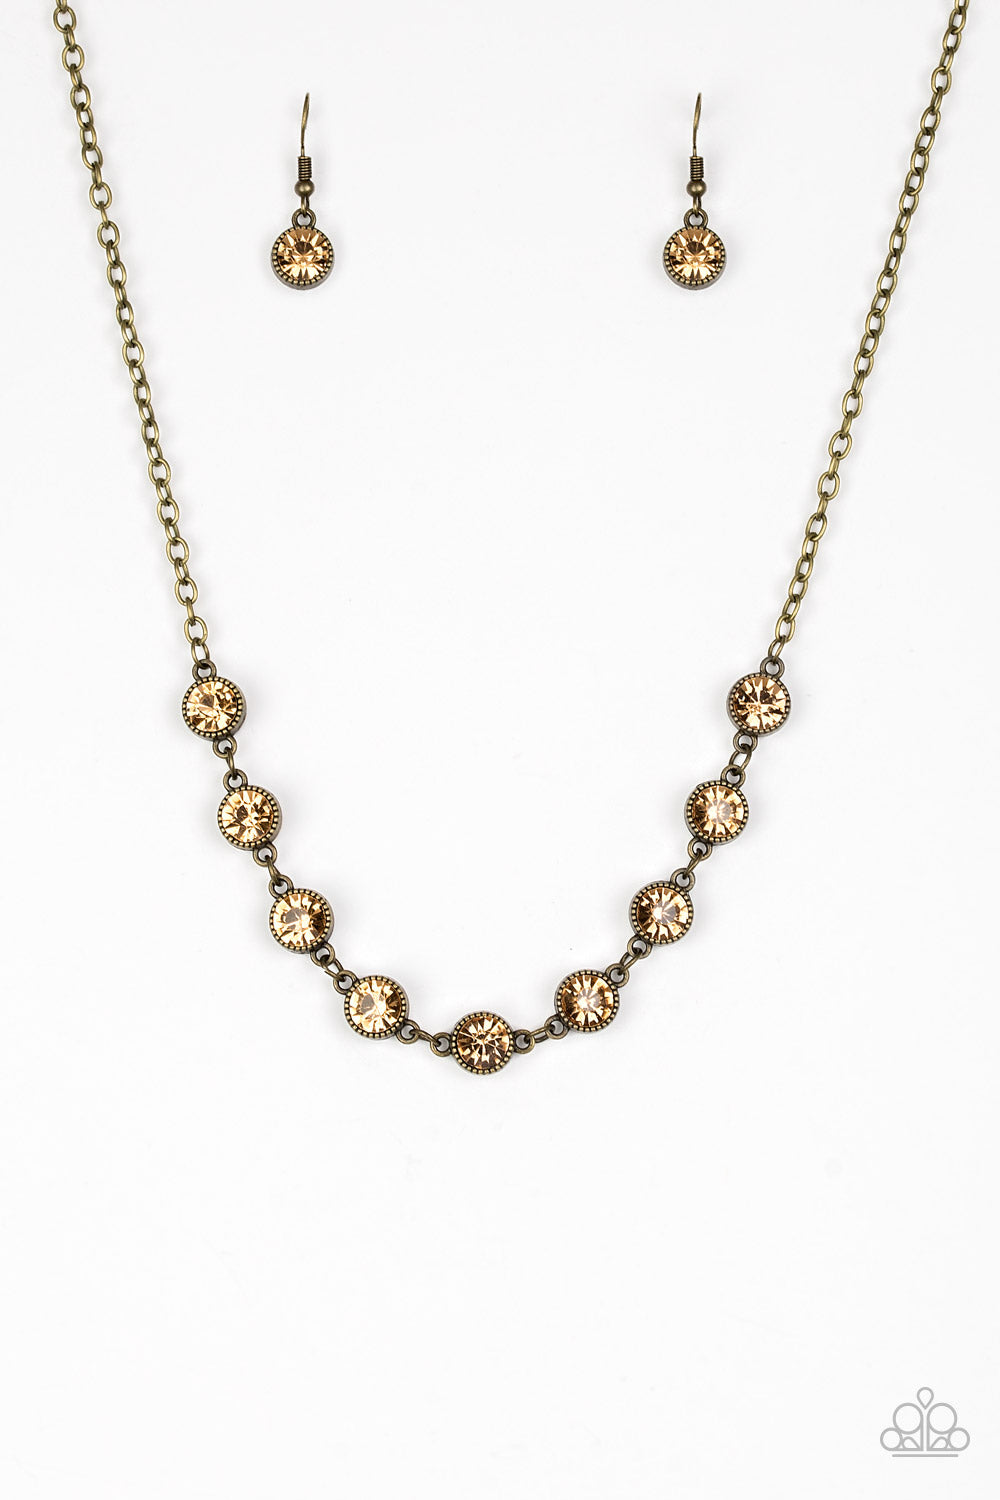 brass, necklace, medium necklace, statement necklace, $5 Accessories, everyday jewelry, brass jewelry